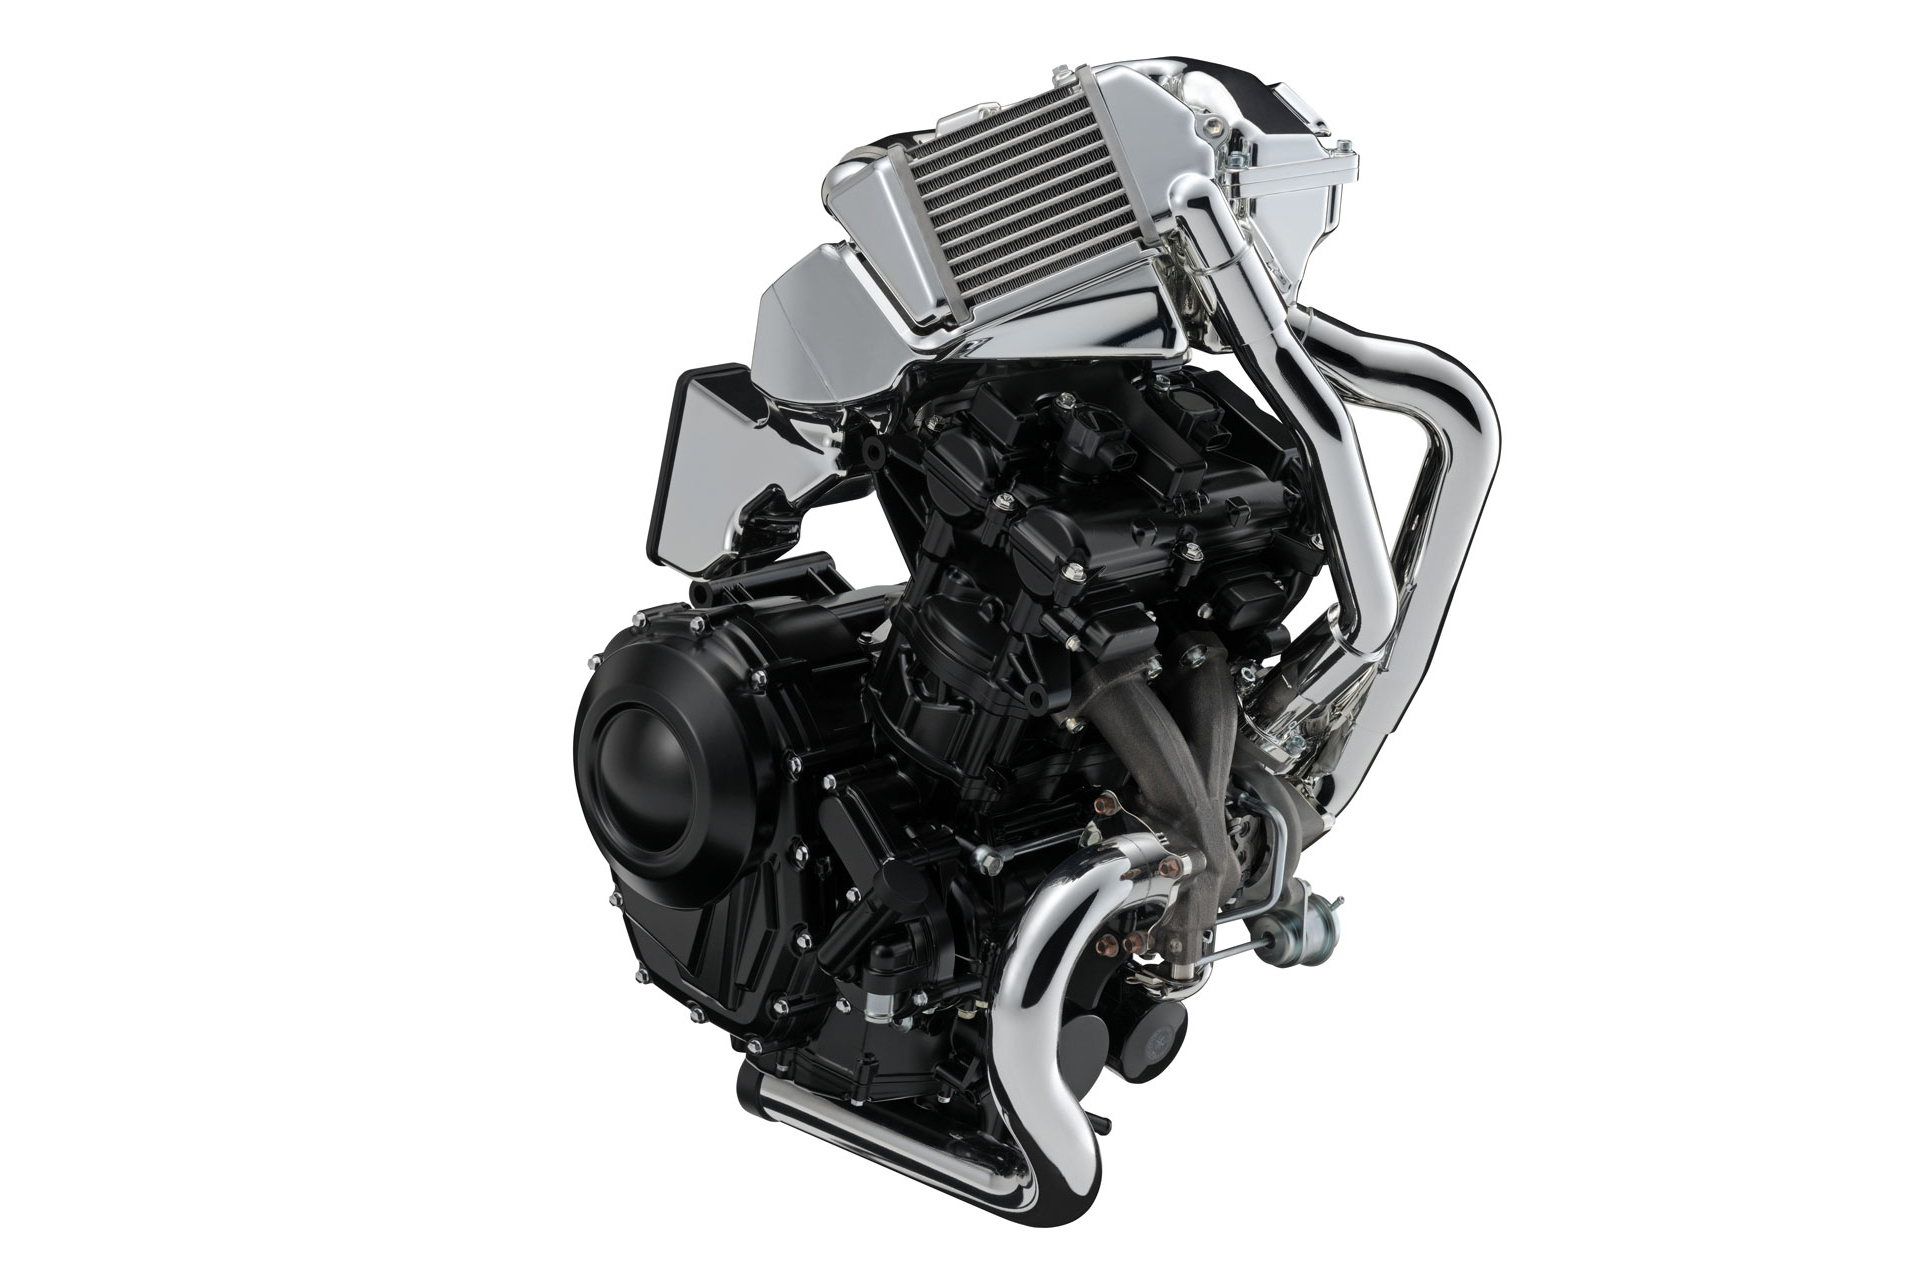 Suzuki displays turbo engine at Tokyo Motor Show